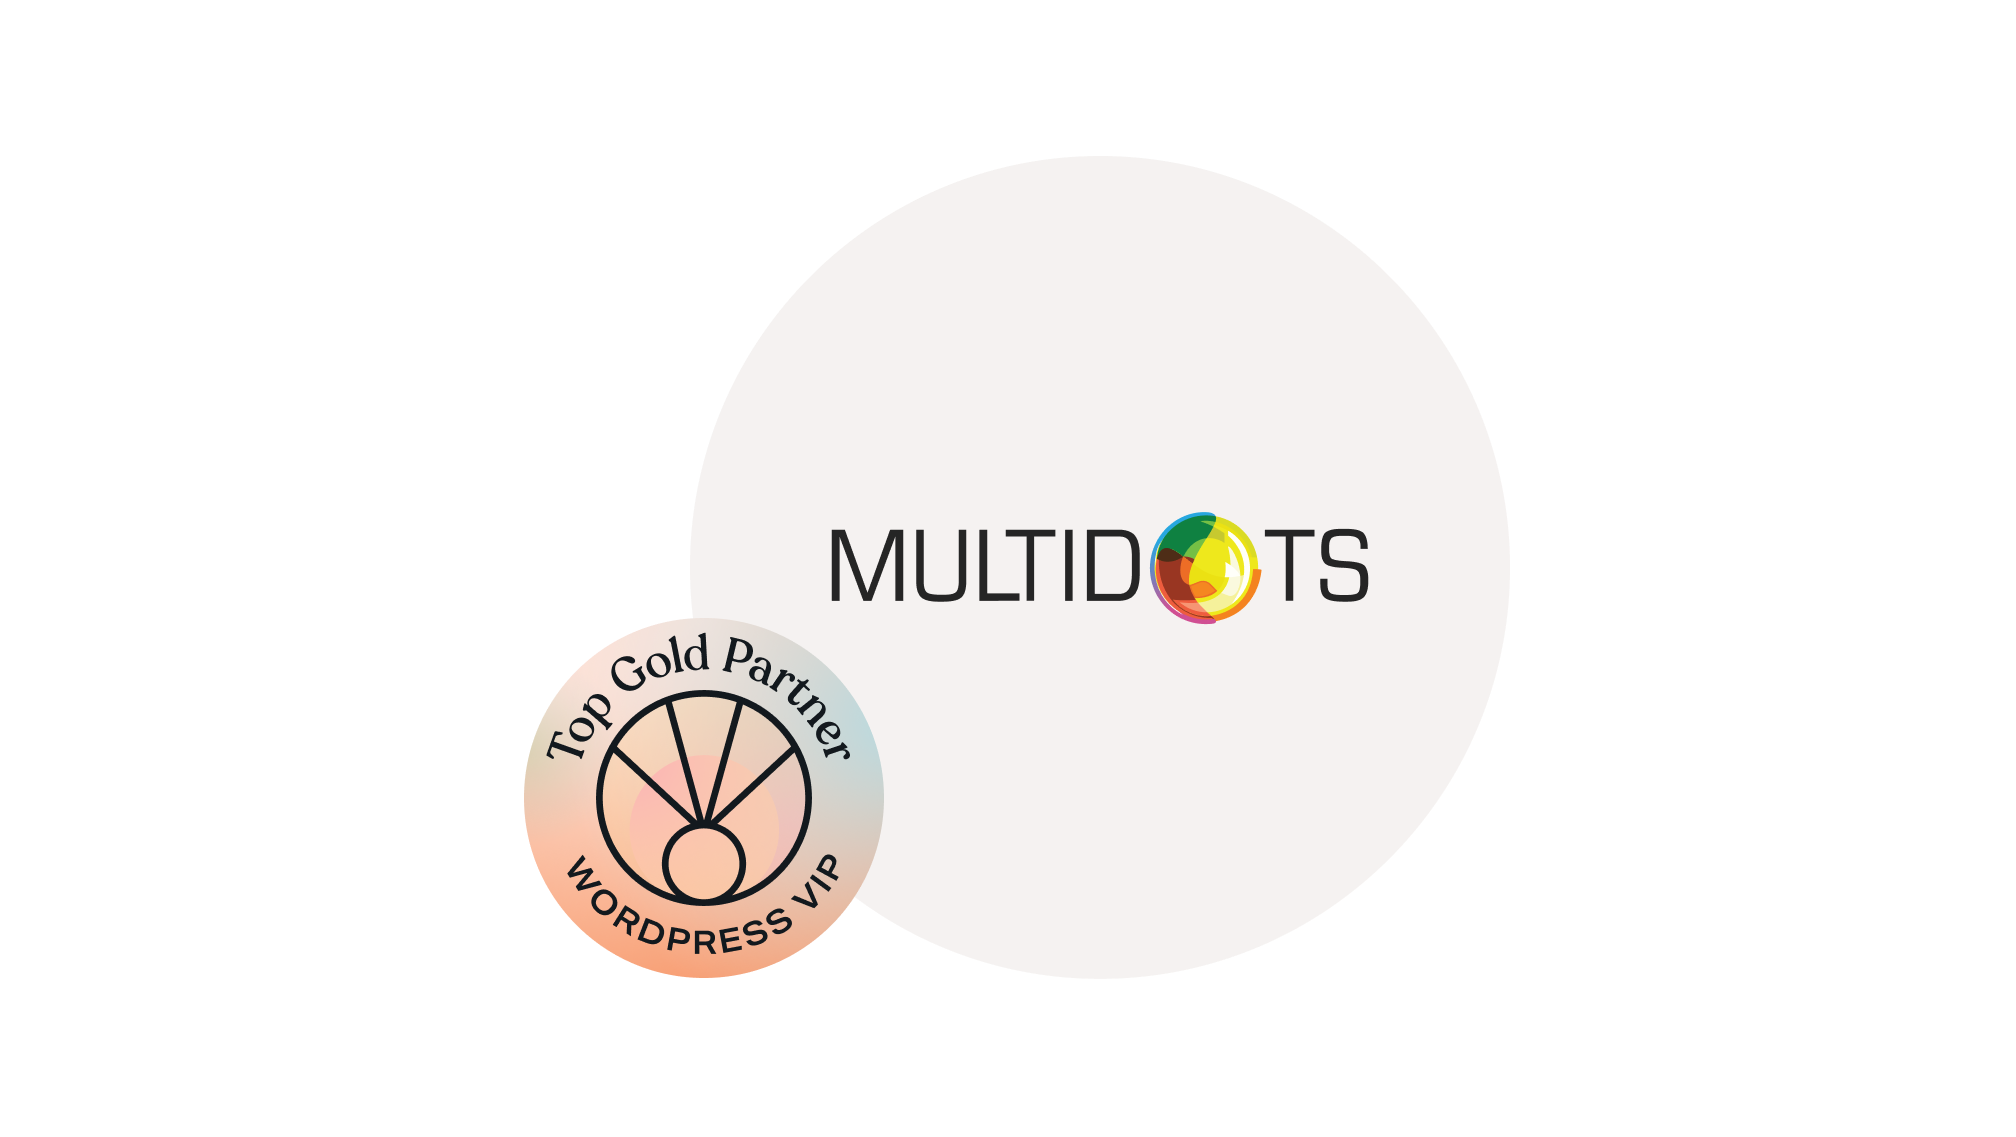 Multidots logo with Top Gold Partner Award badge